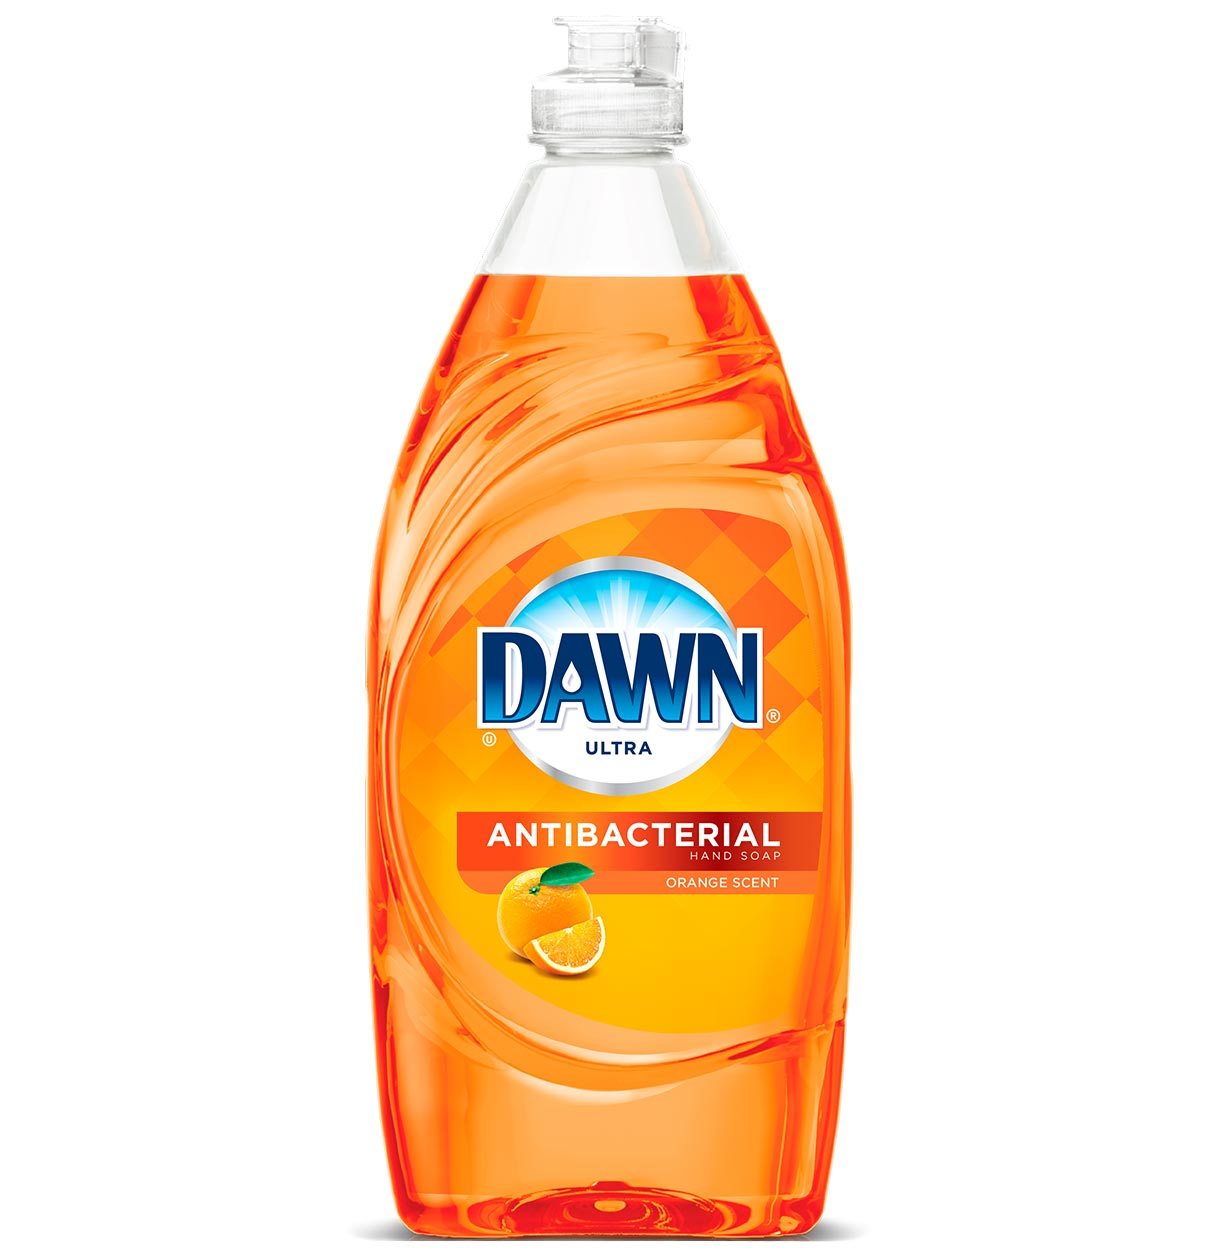 Jabón para manos antibacterial Dawn, líquido para trastes, naranja